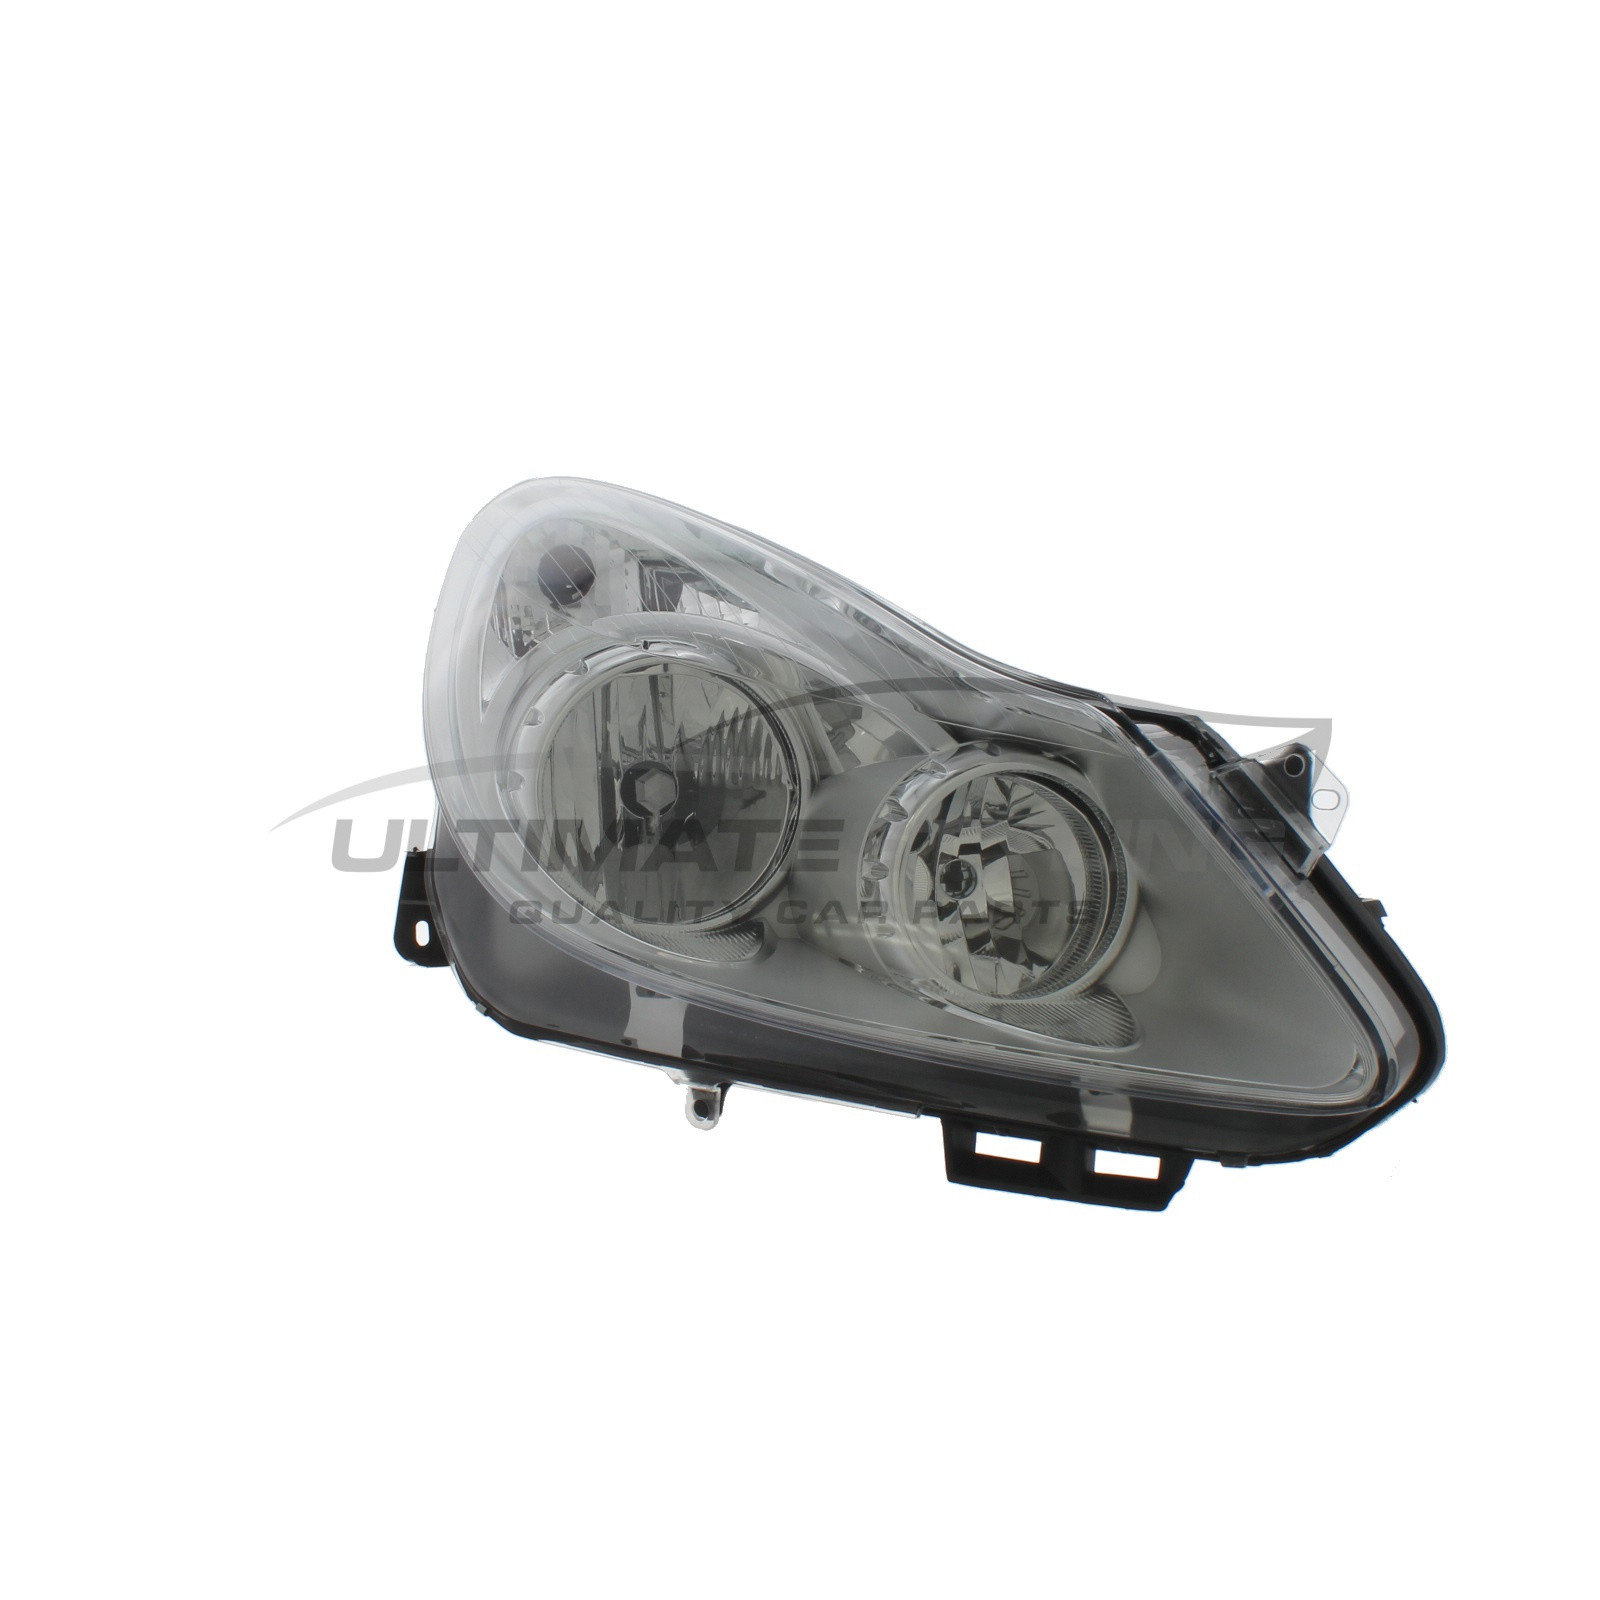 Headlight / Headlamp for Vauxhall Corsa